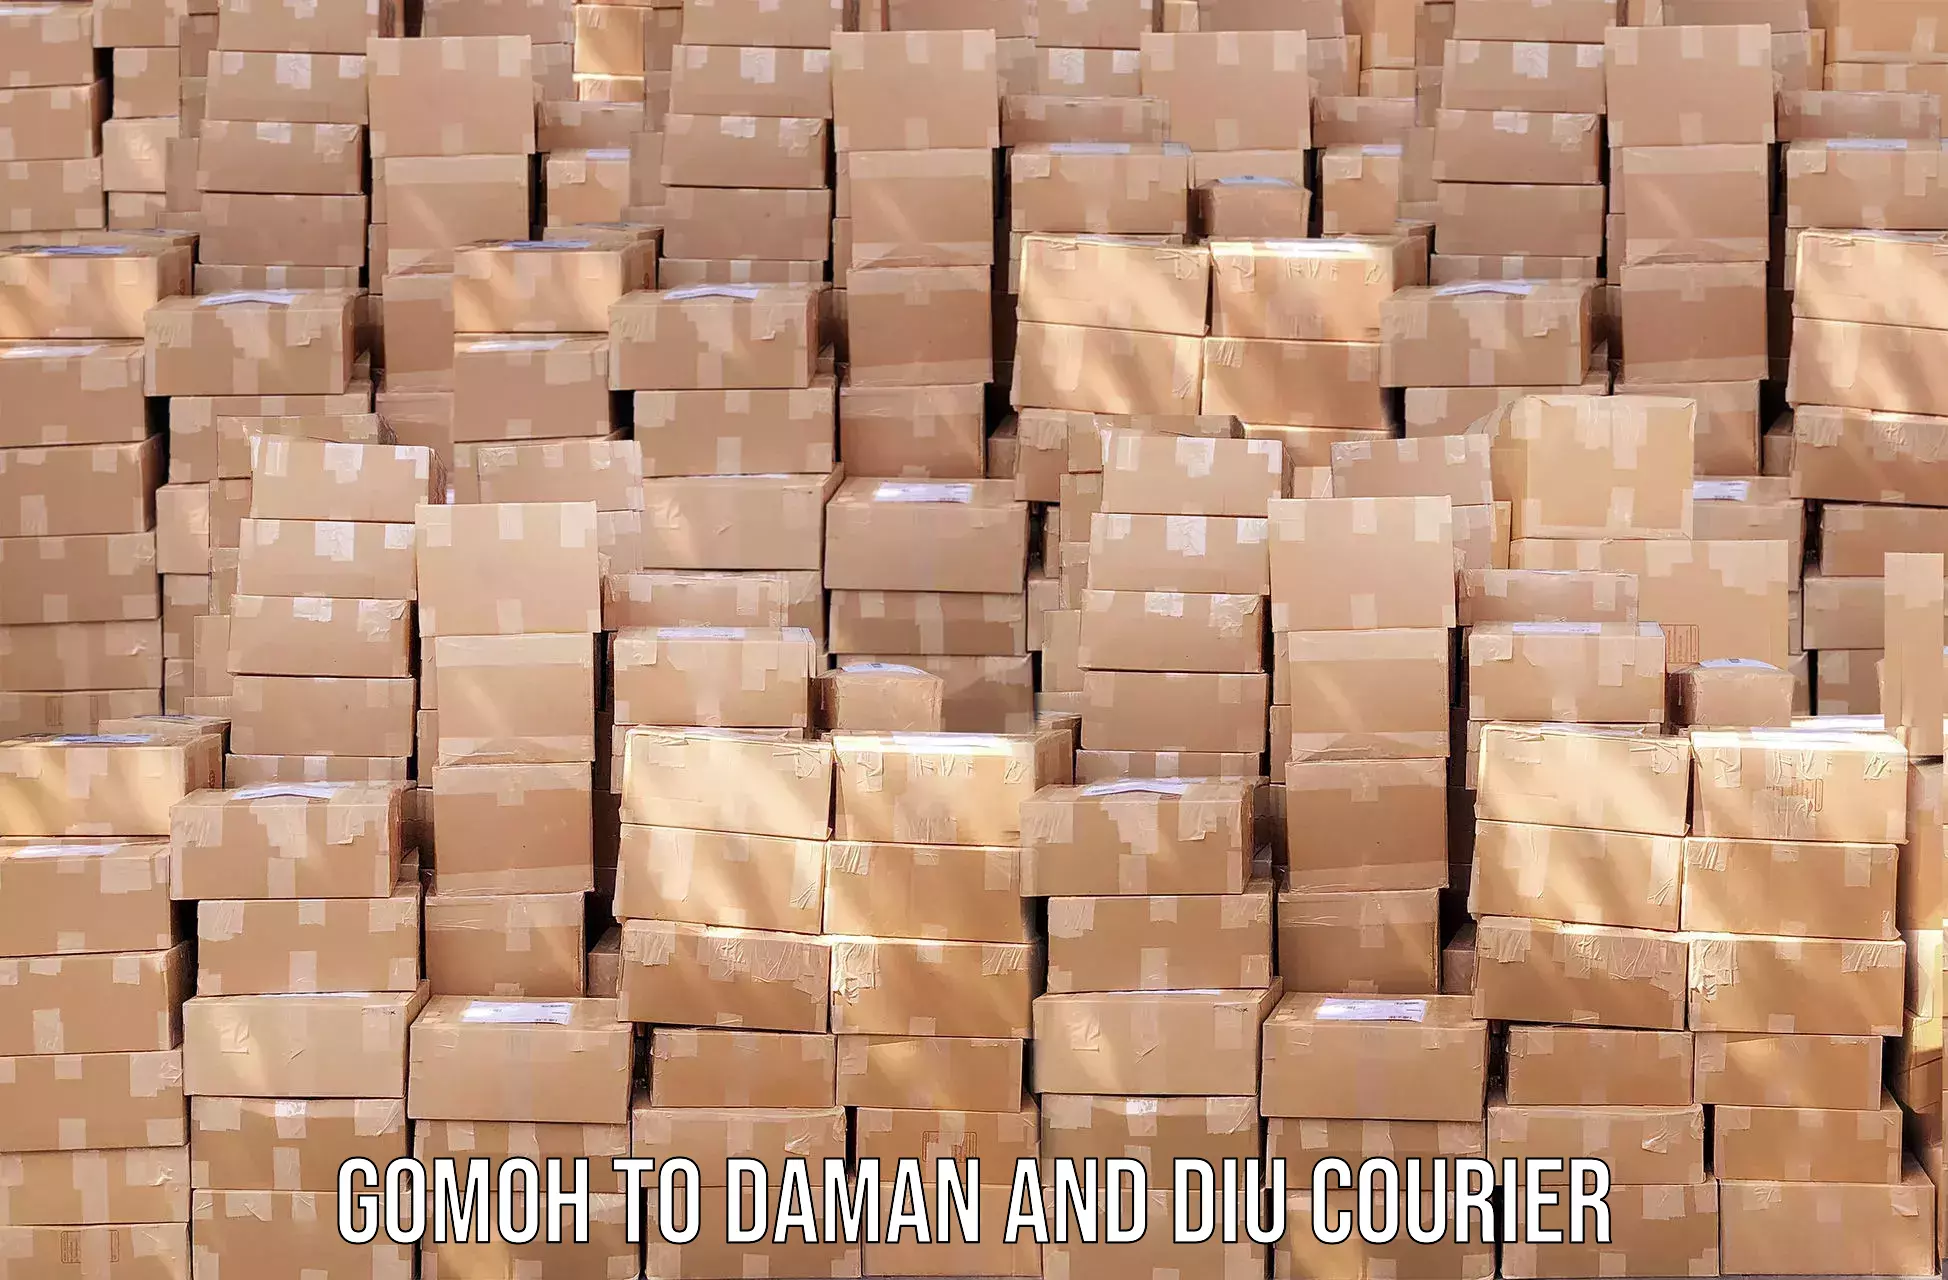 Digital courier platforms Gomoh to Daman